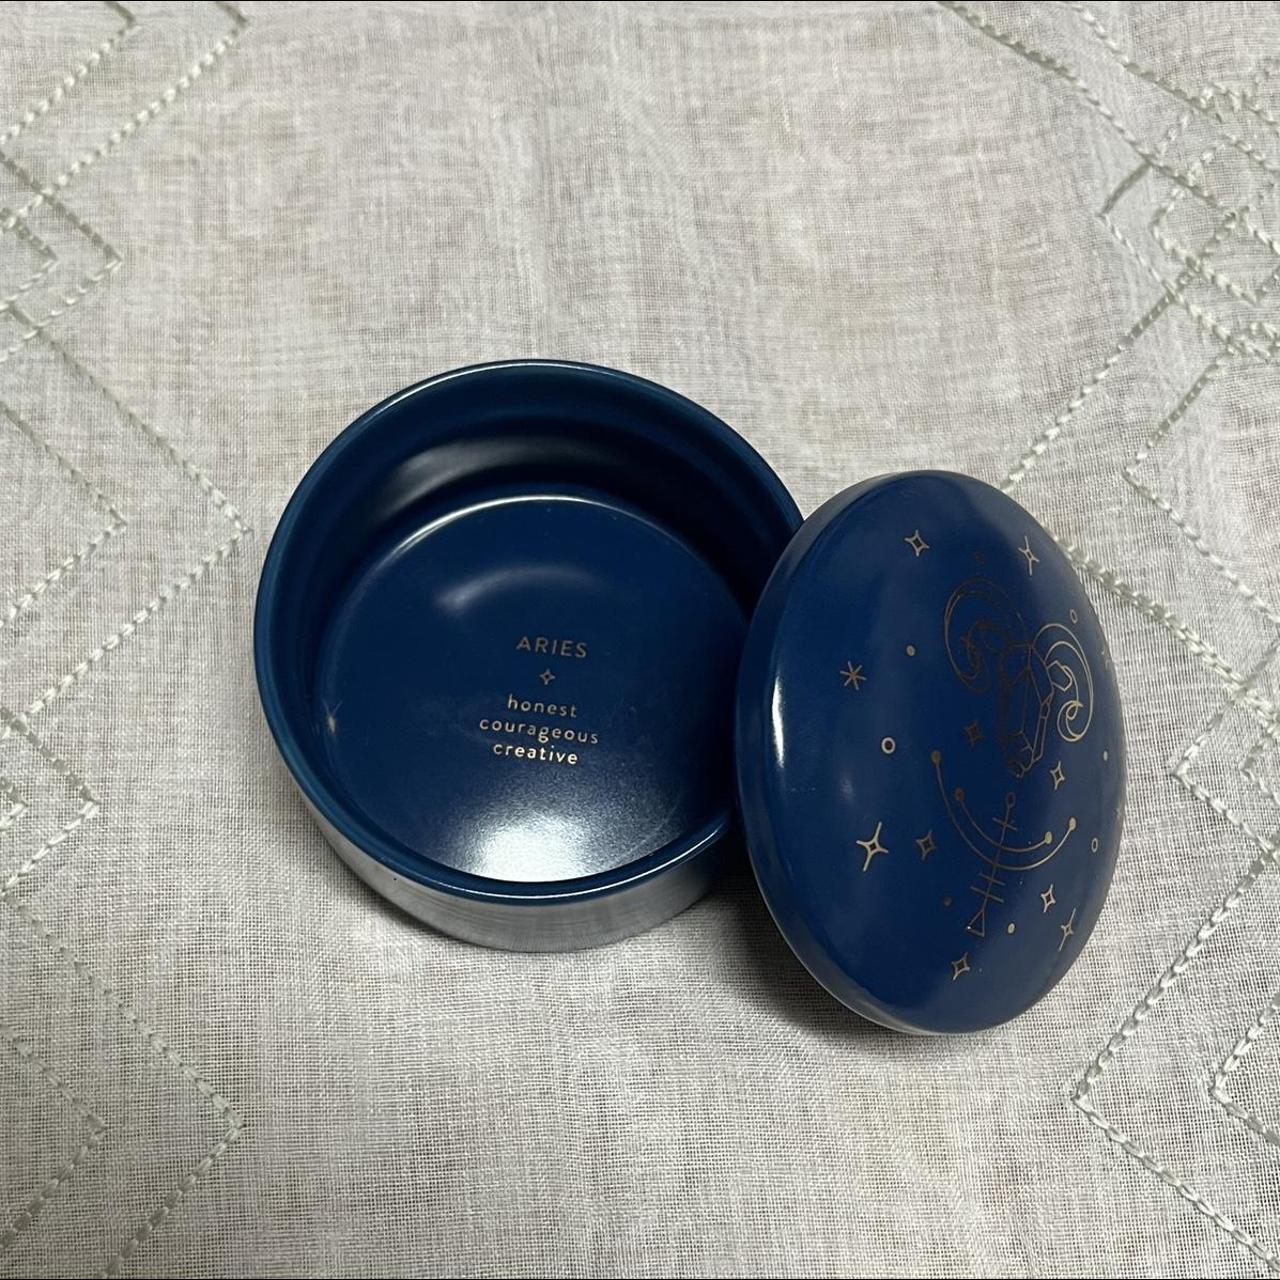 Product Image 2 - Blue ceramic Aries jewelry box